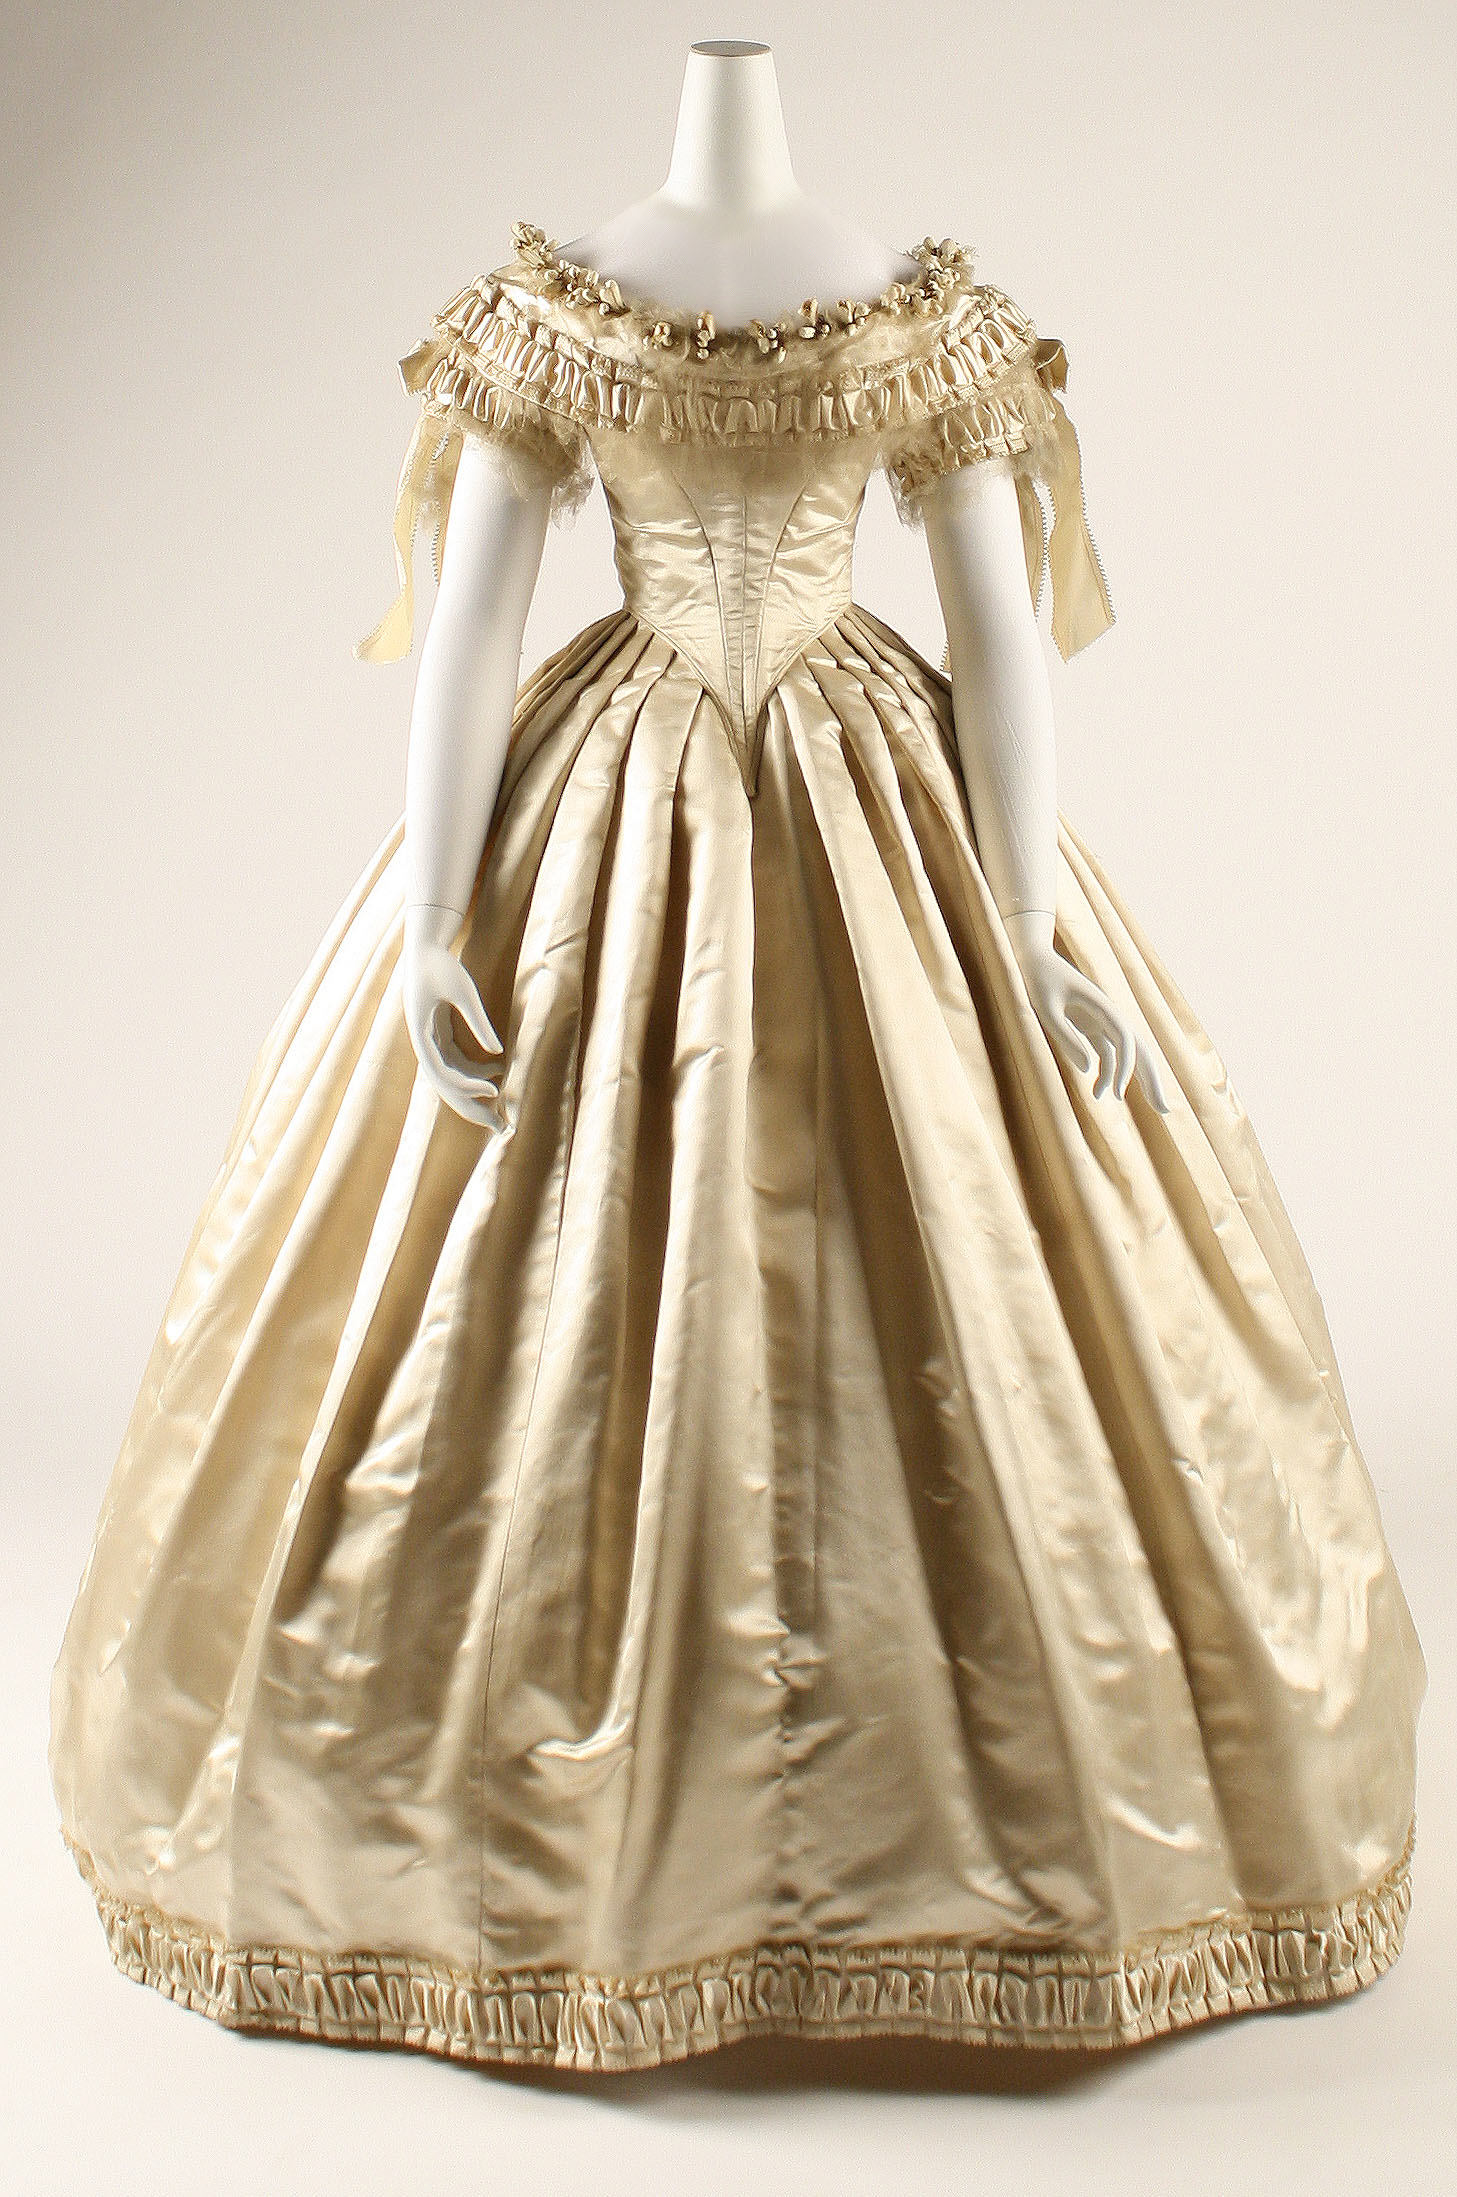 Wedding dress | American | The Metropolitan Museum of Art